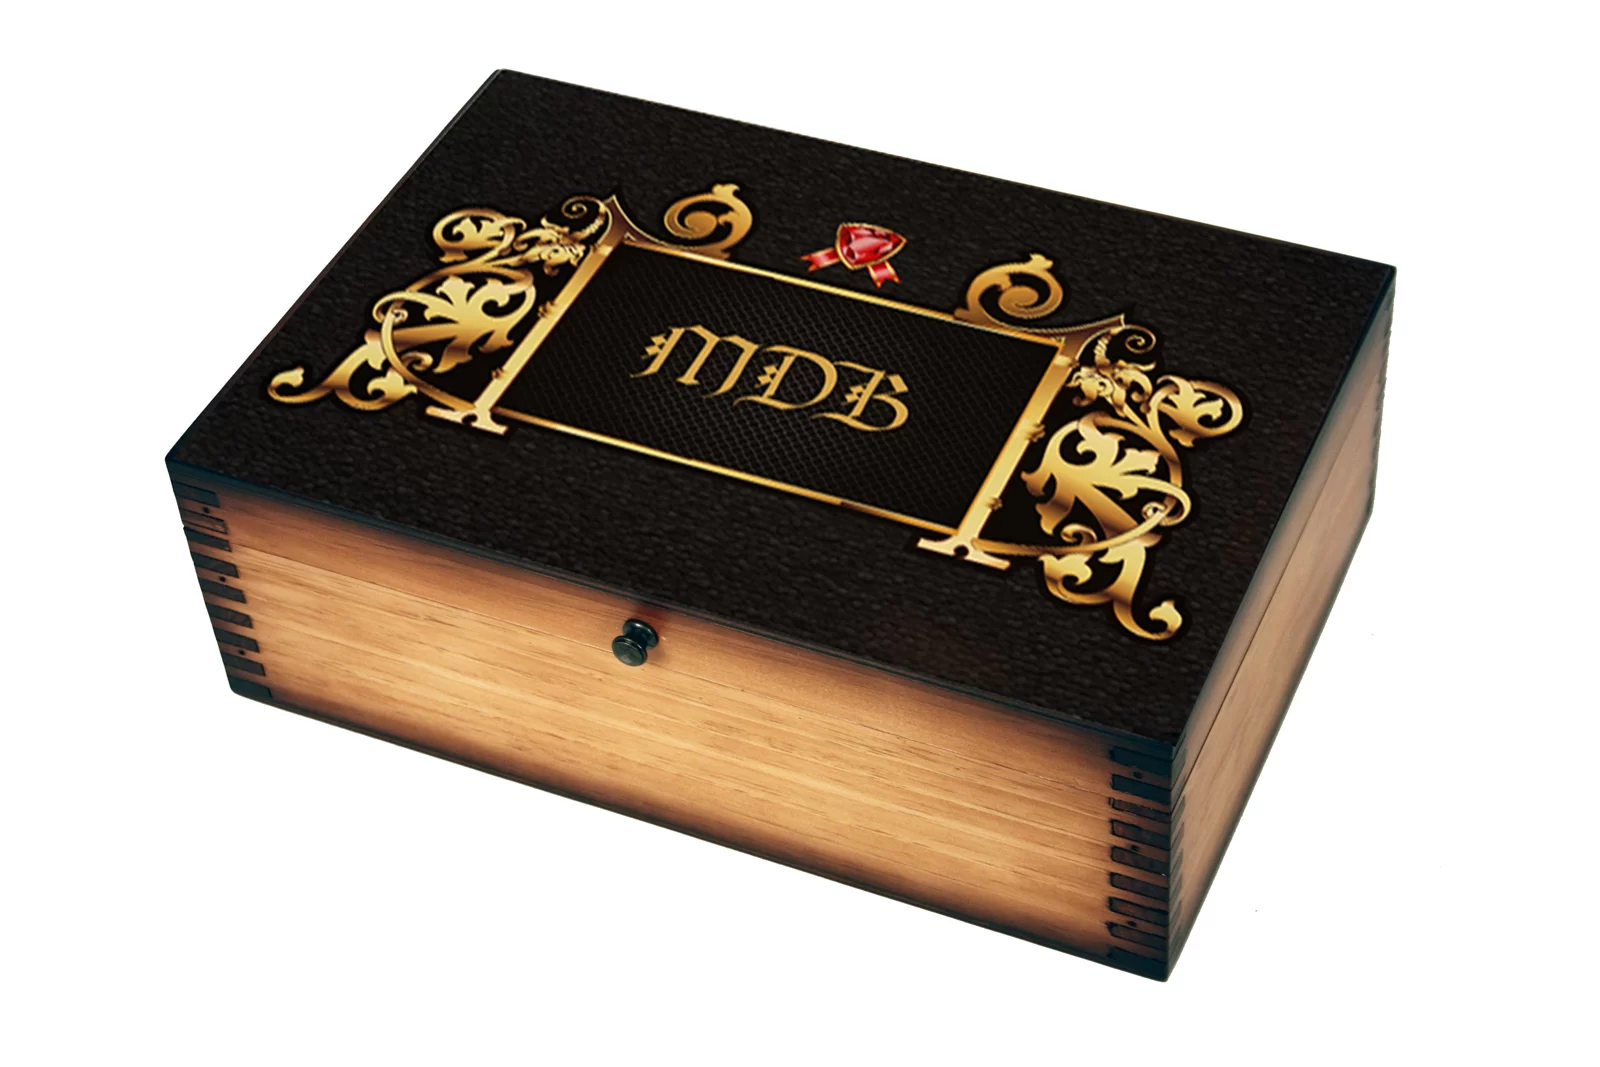 Custom Wedding Card Box - Relic Wood